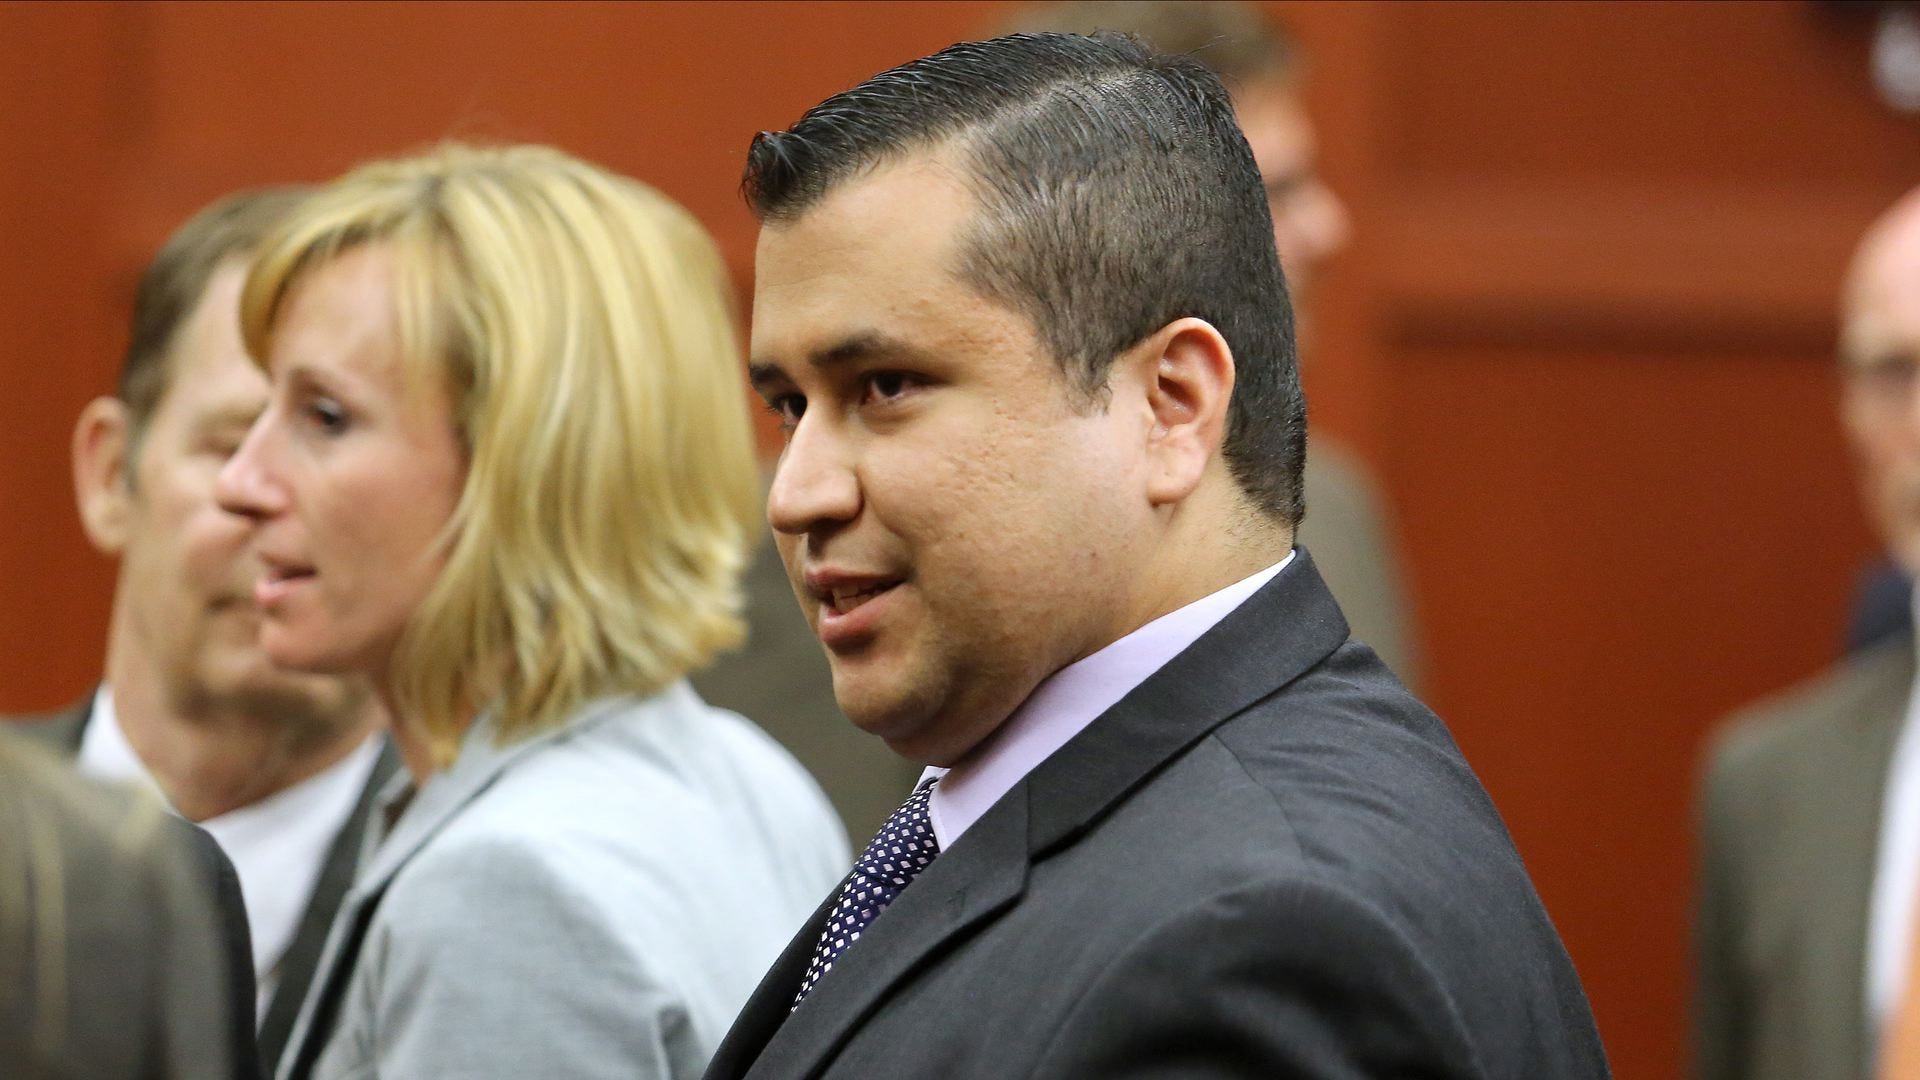 Holder vows to press federal probe in Zimmerman case1920 x 1080